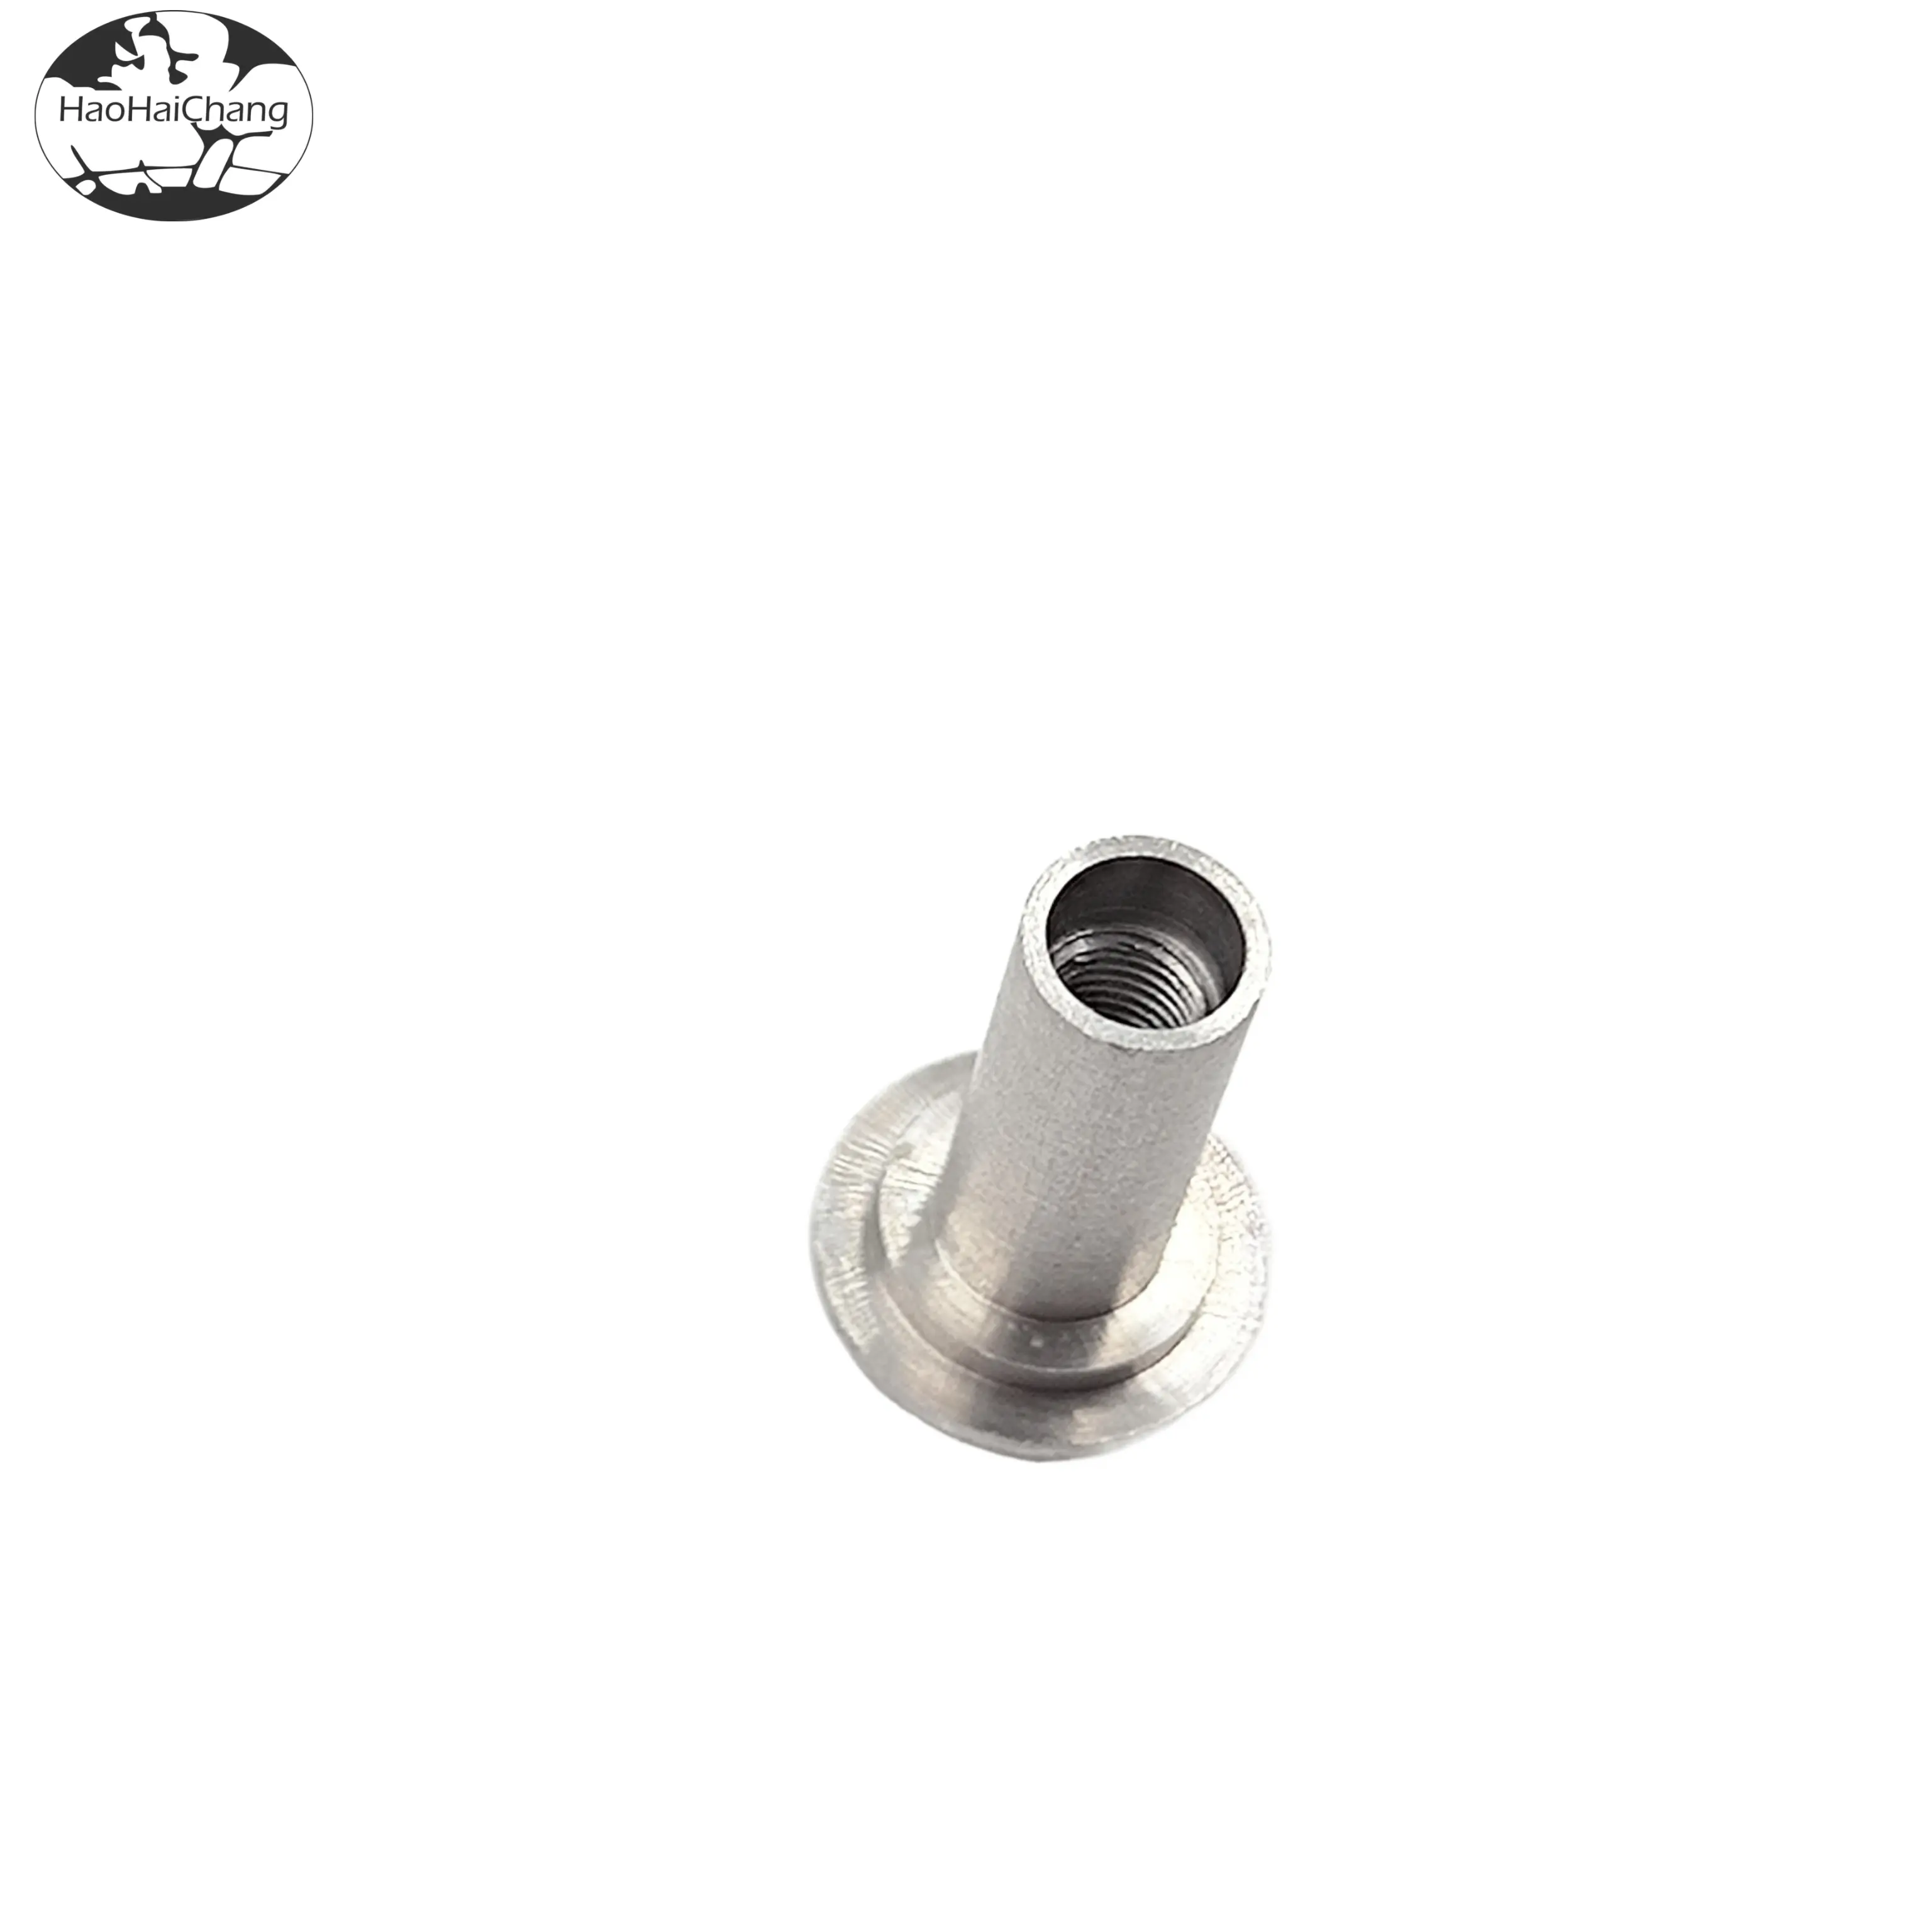 HHC-779 M3 Internal Thread Through Hole Stainless Steel Adjusting Nut